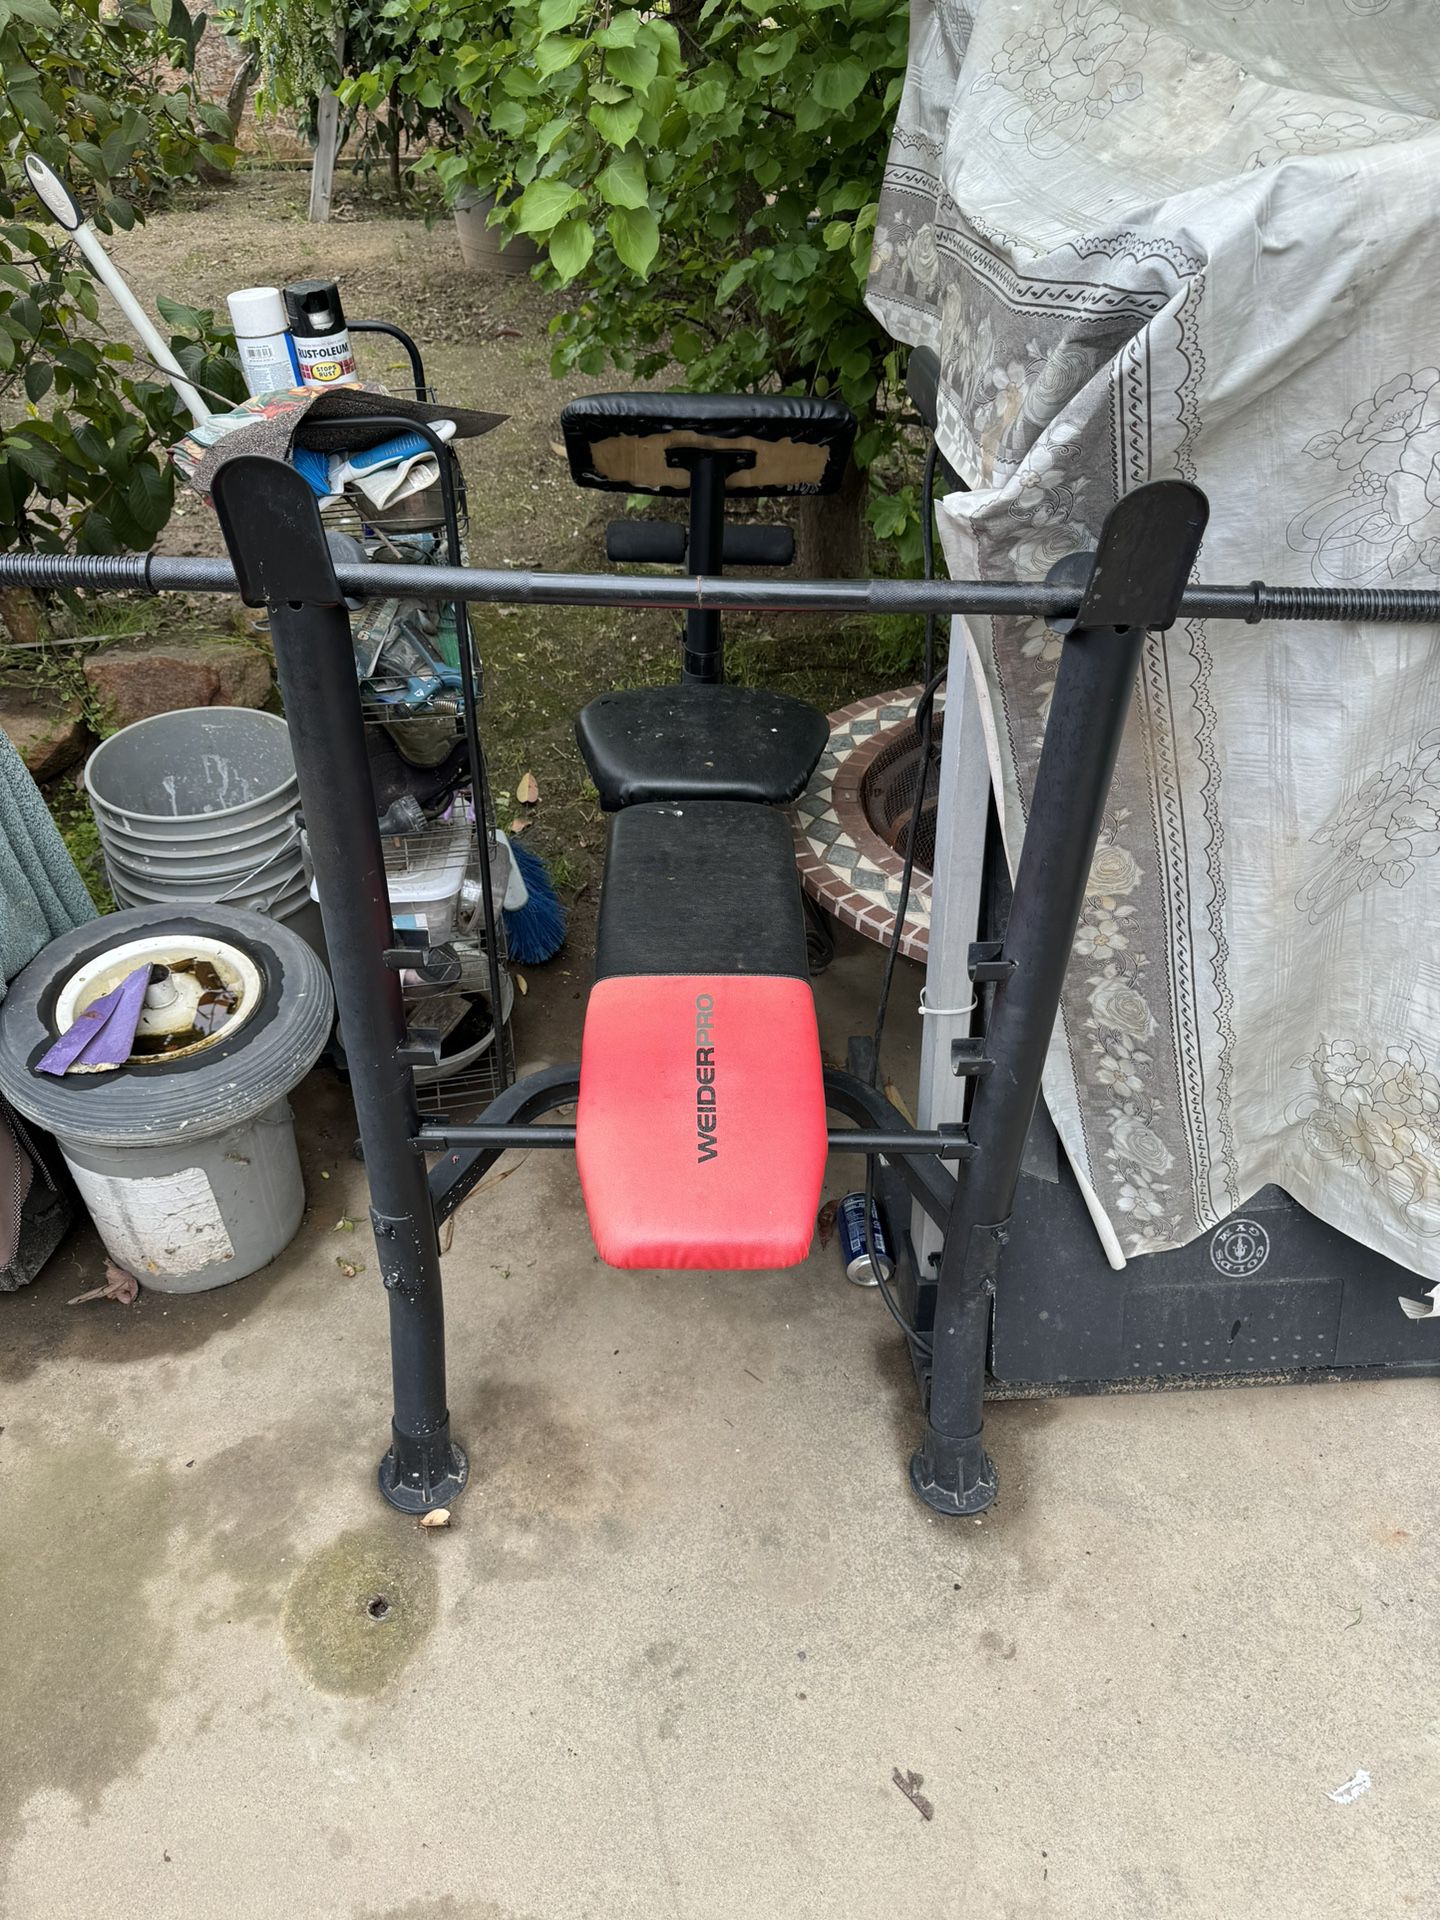 Weiderpro bench set with weights